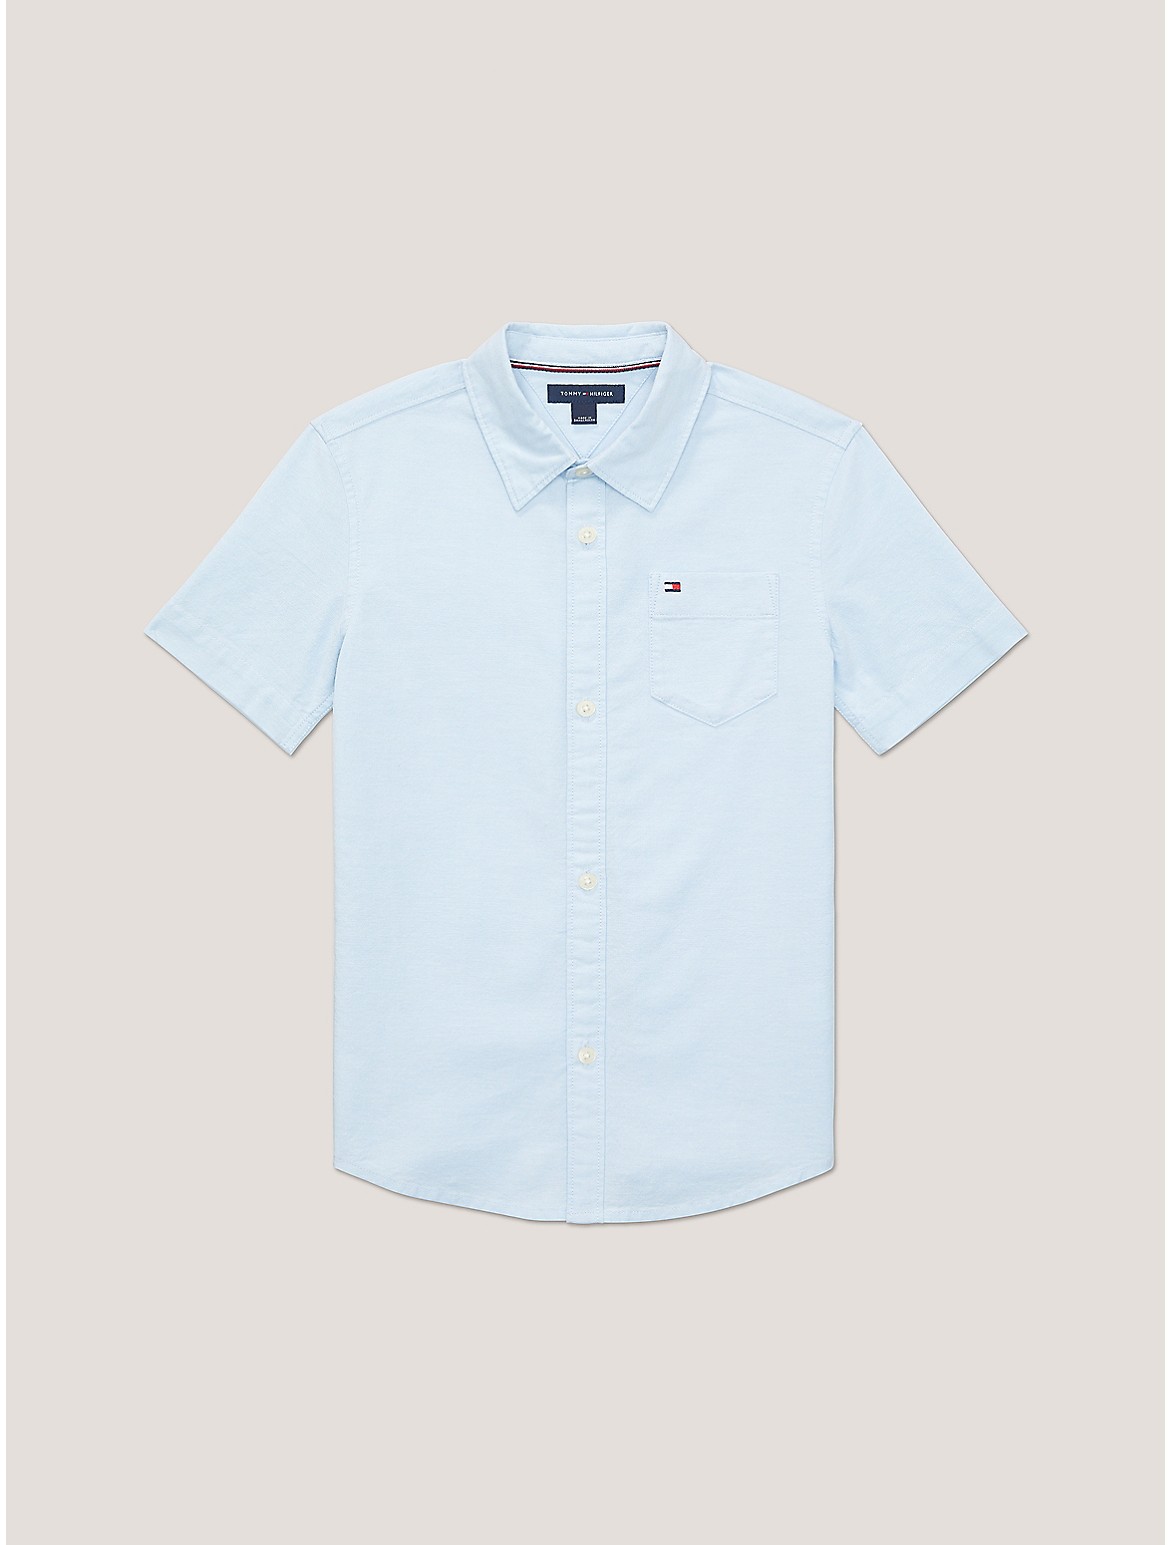 Tommy Hilfiger Boys' Kids' Short-Sleeve Stretch Oxford Shirt